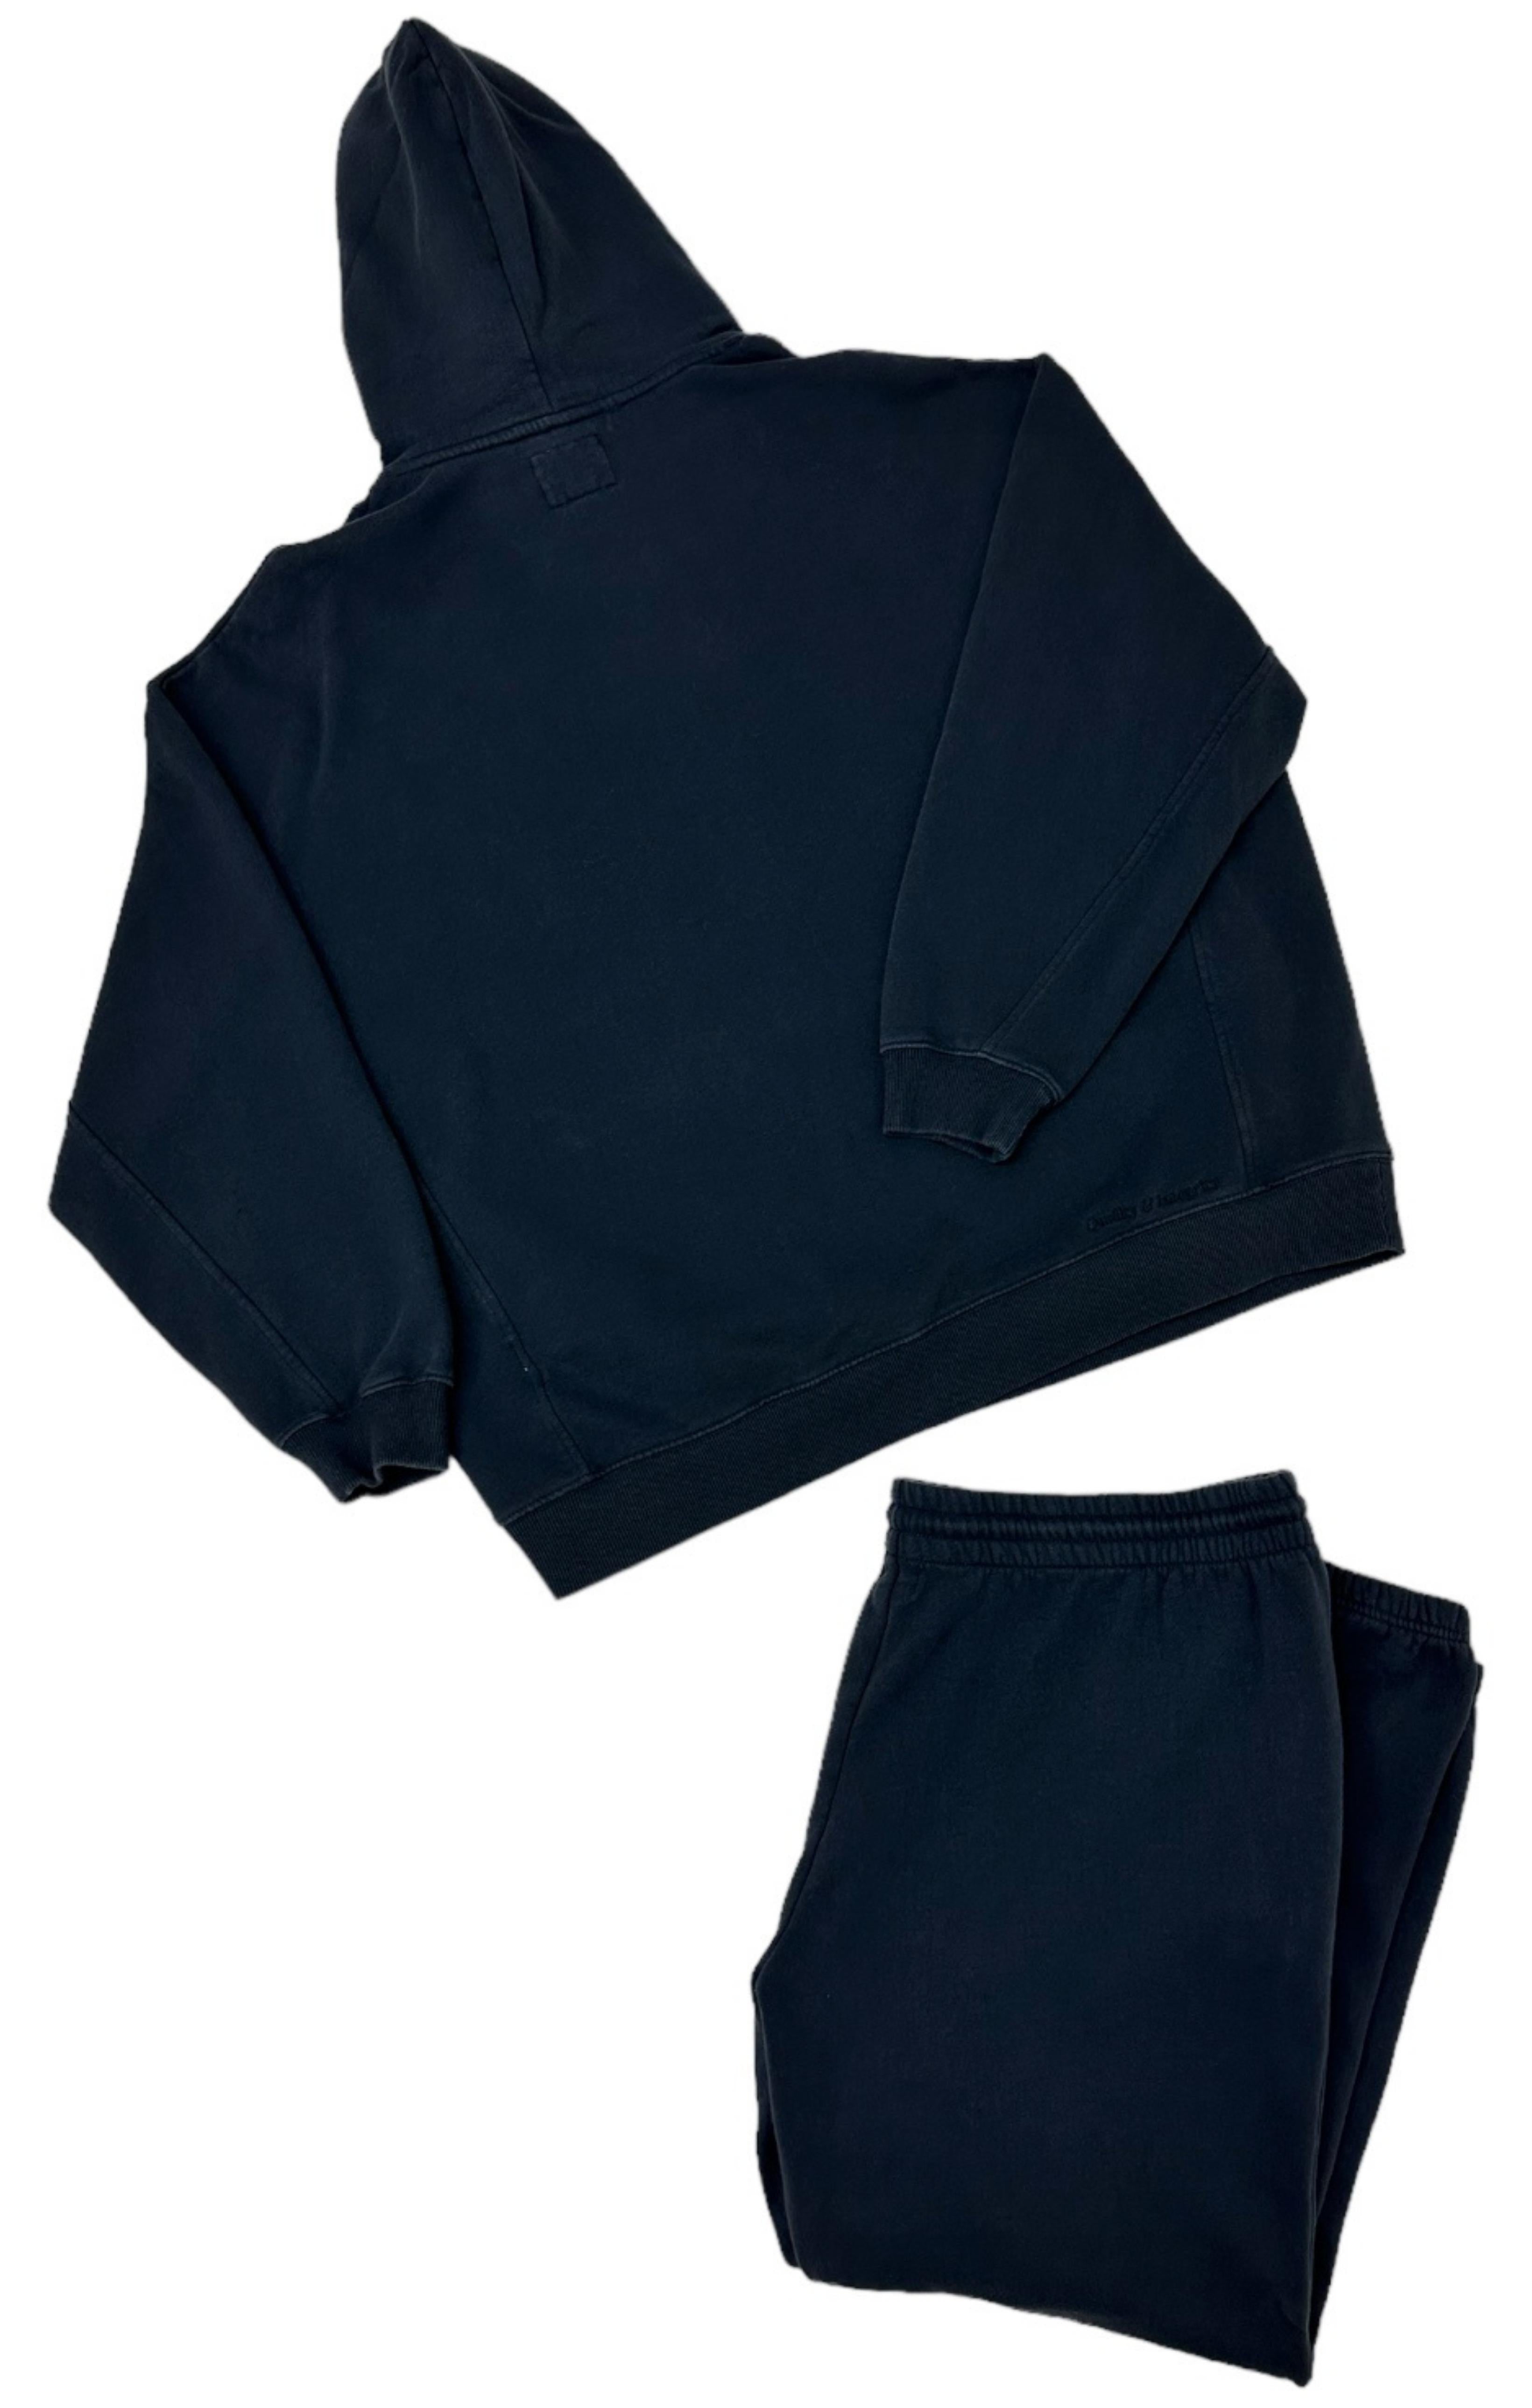 ROOTS Sweatsuit Size: 7 / Fits like 2XL